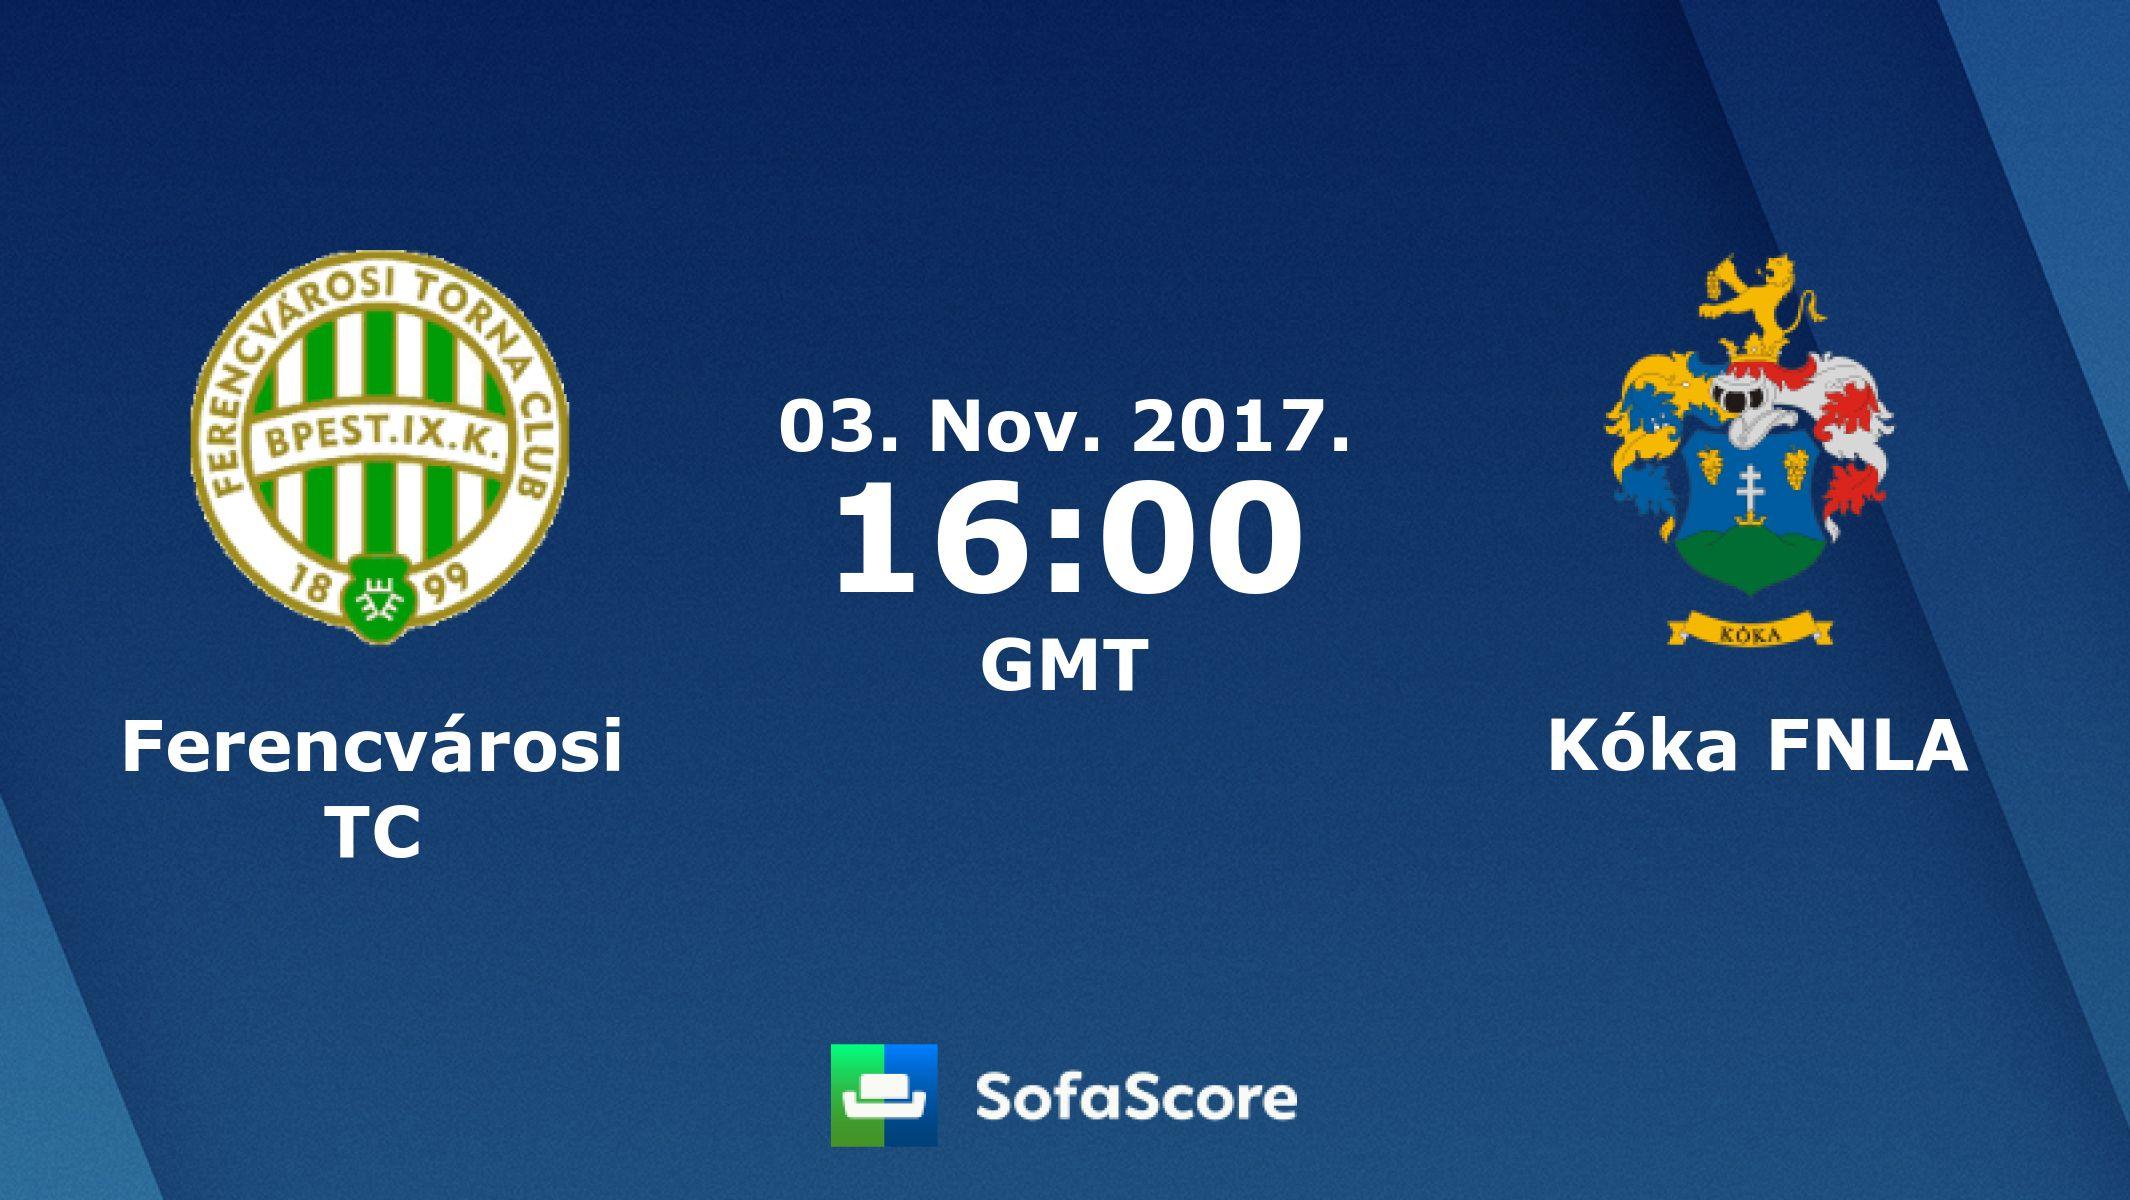 FNLA Logo - Ferencvárosi TC Kóka FNLA live score, video stream and H2H results ...